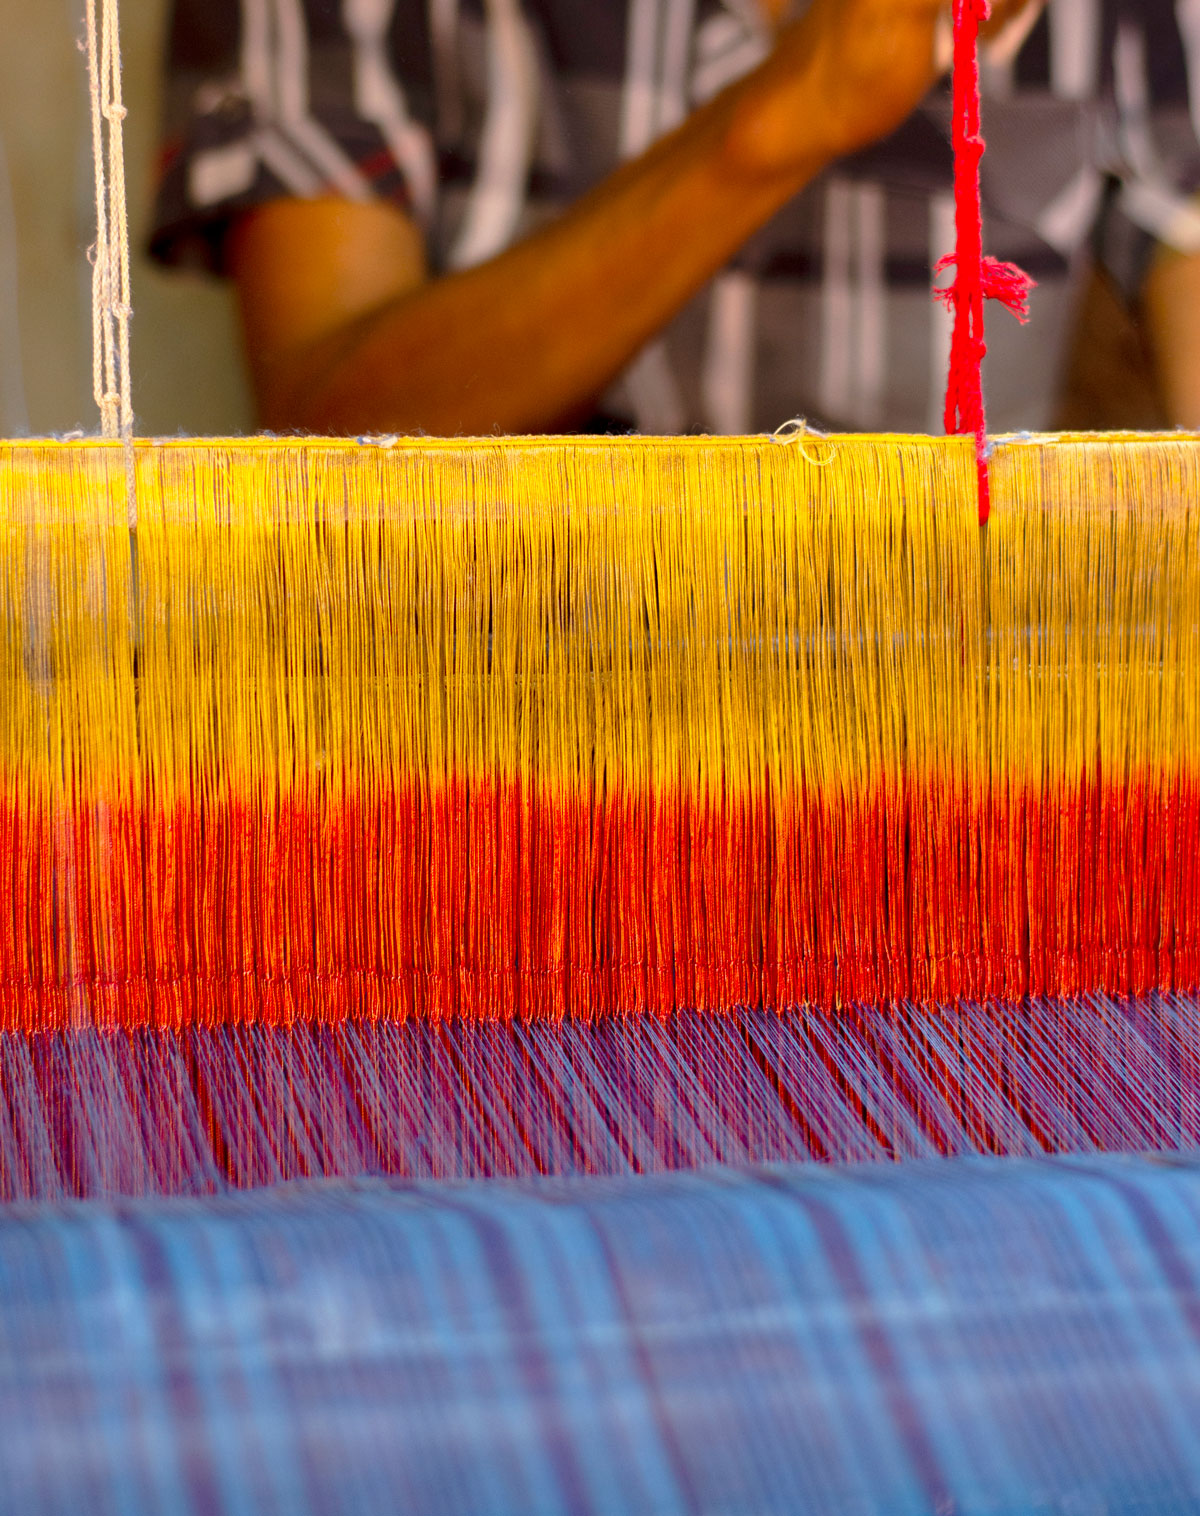 Colorful thread on a loom.